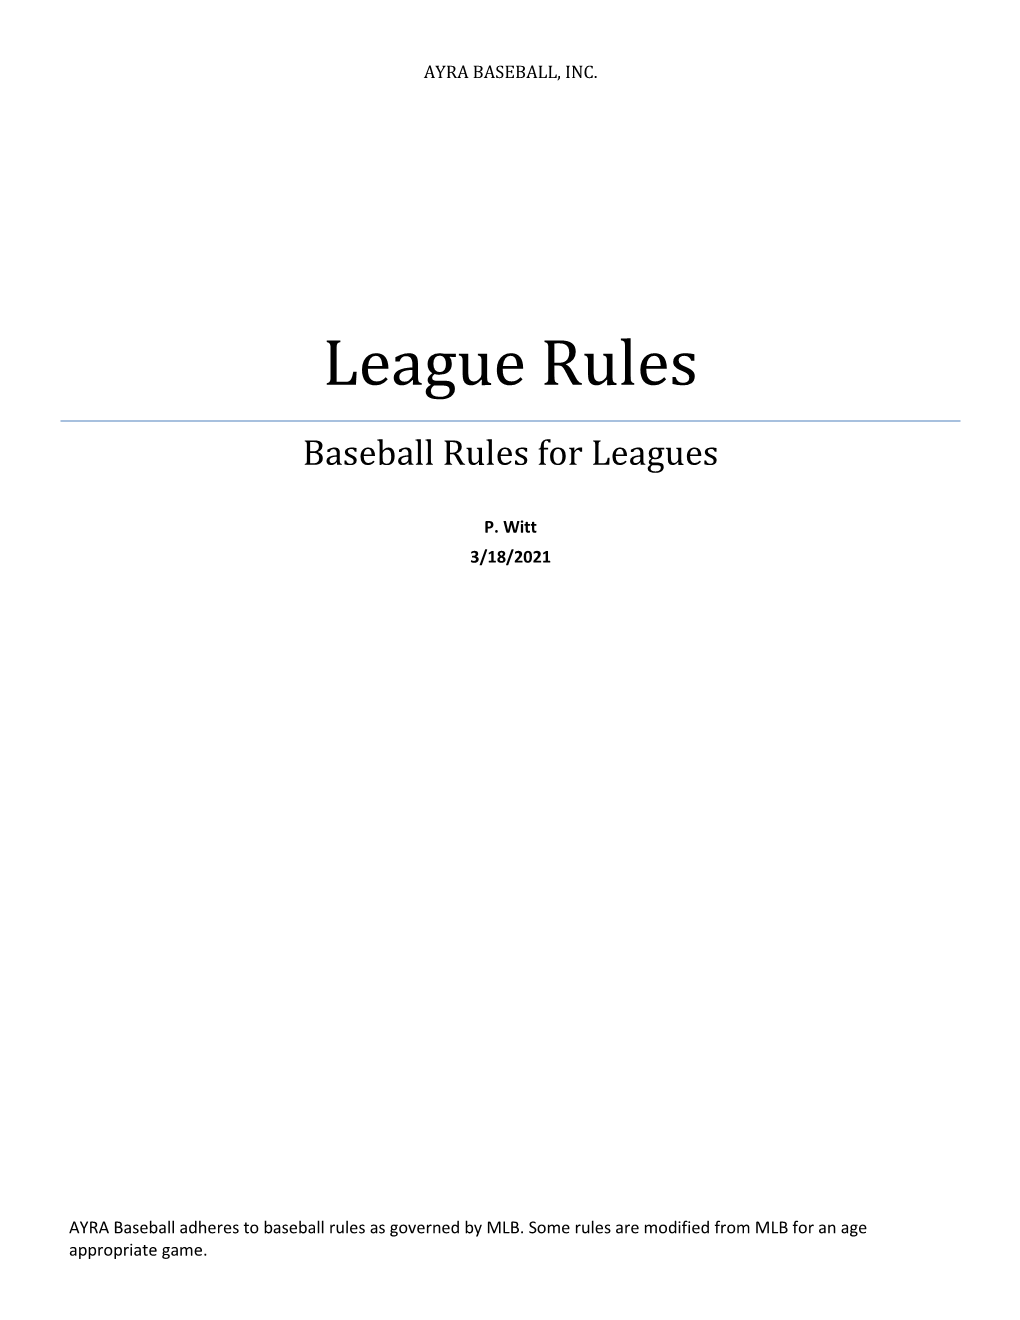 League Rules